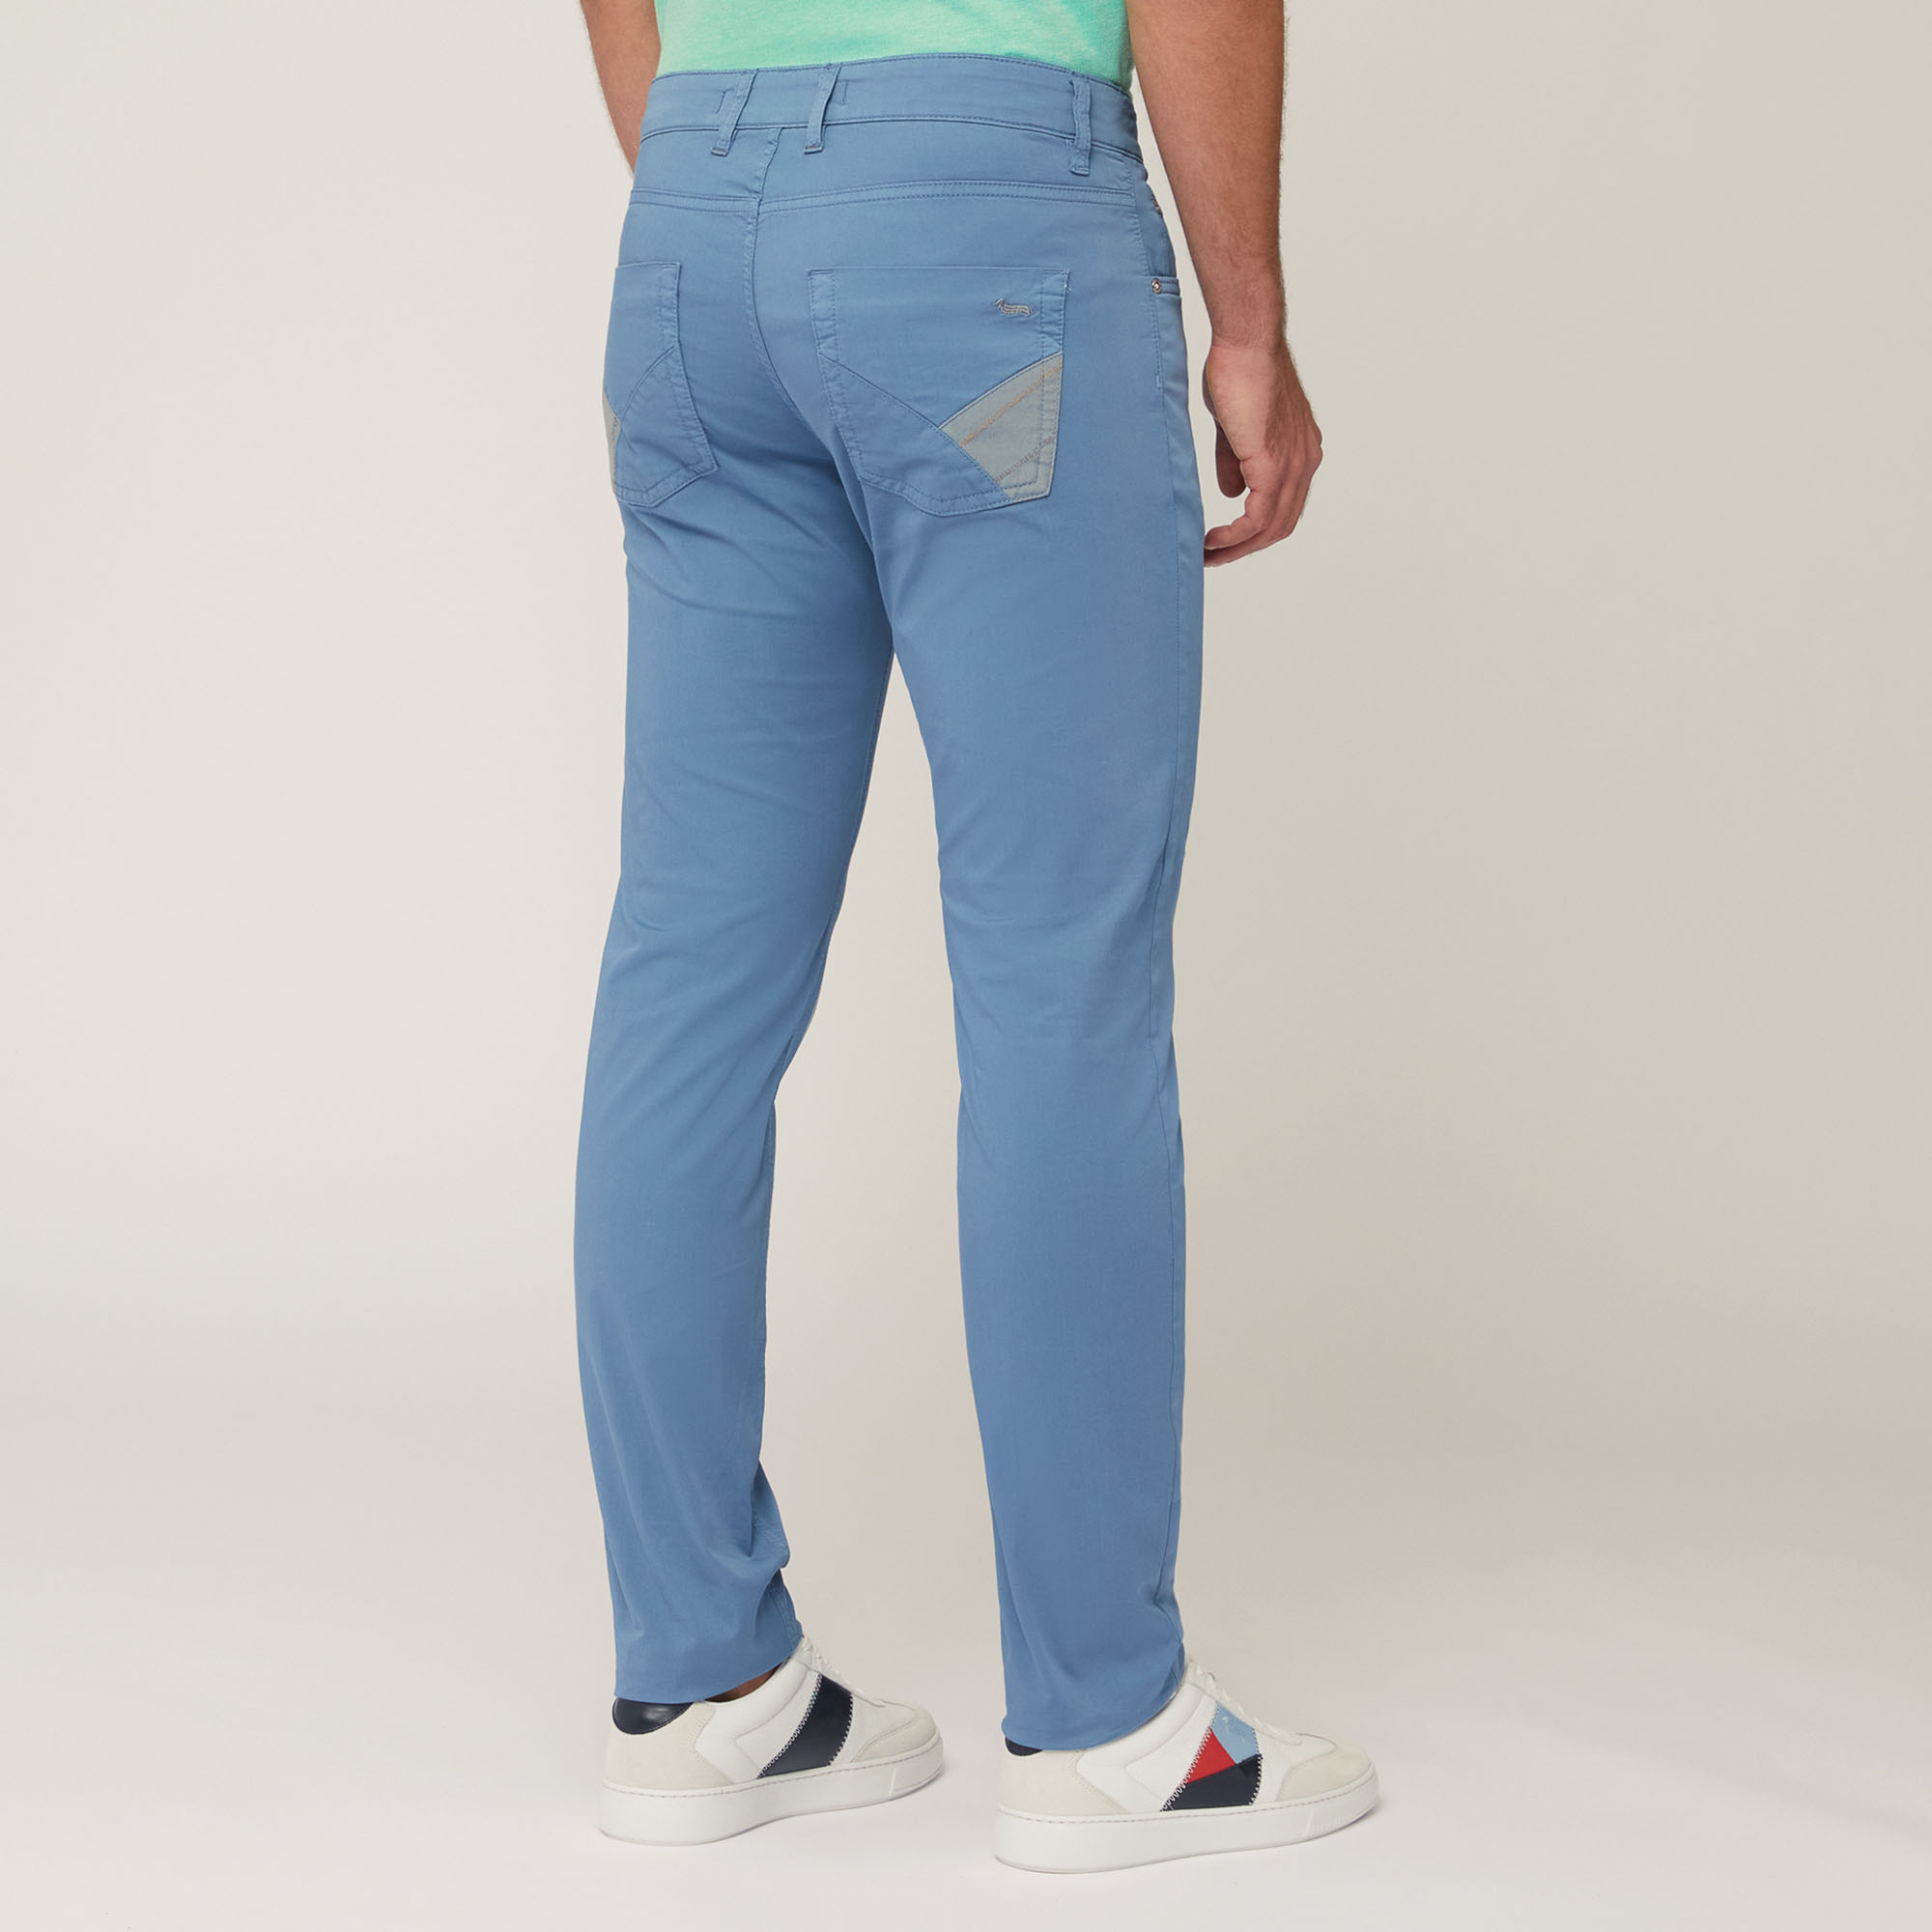 Pantaloni Con Inserti, Blu, large image number 1